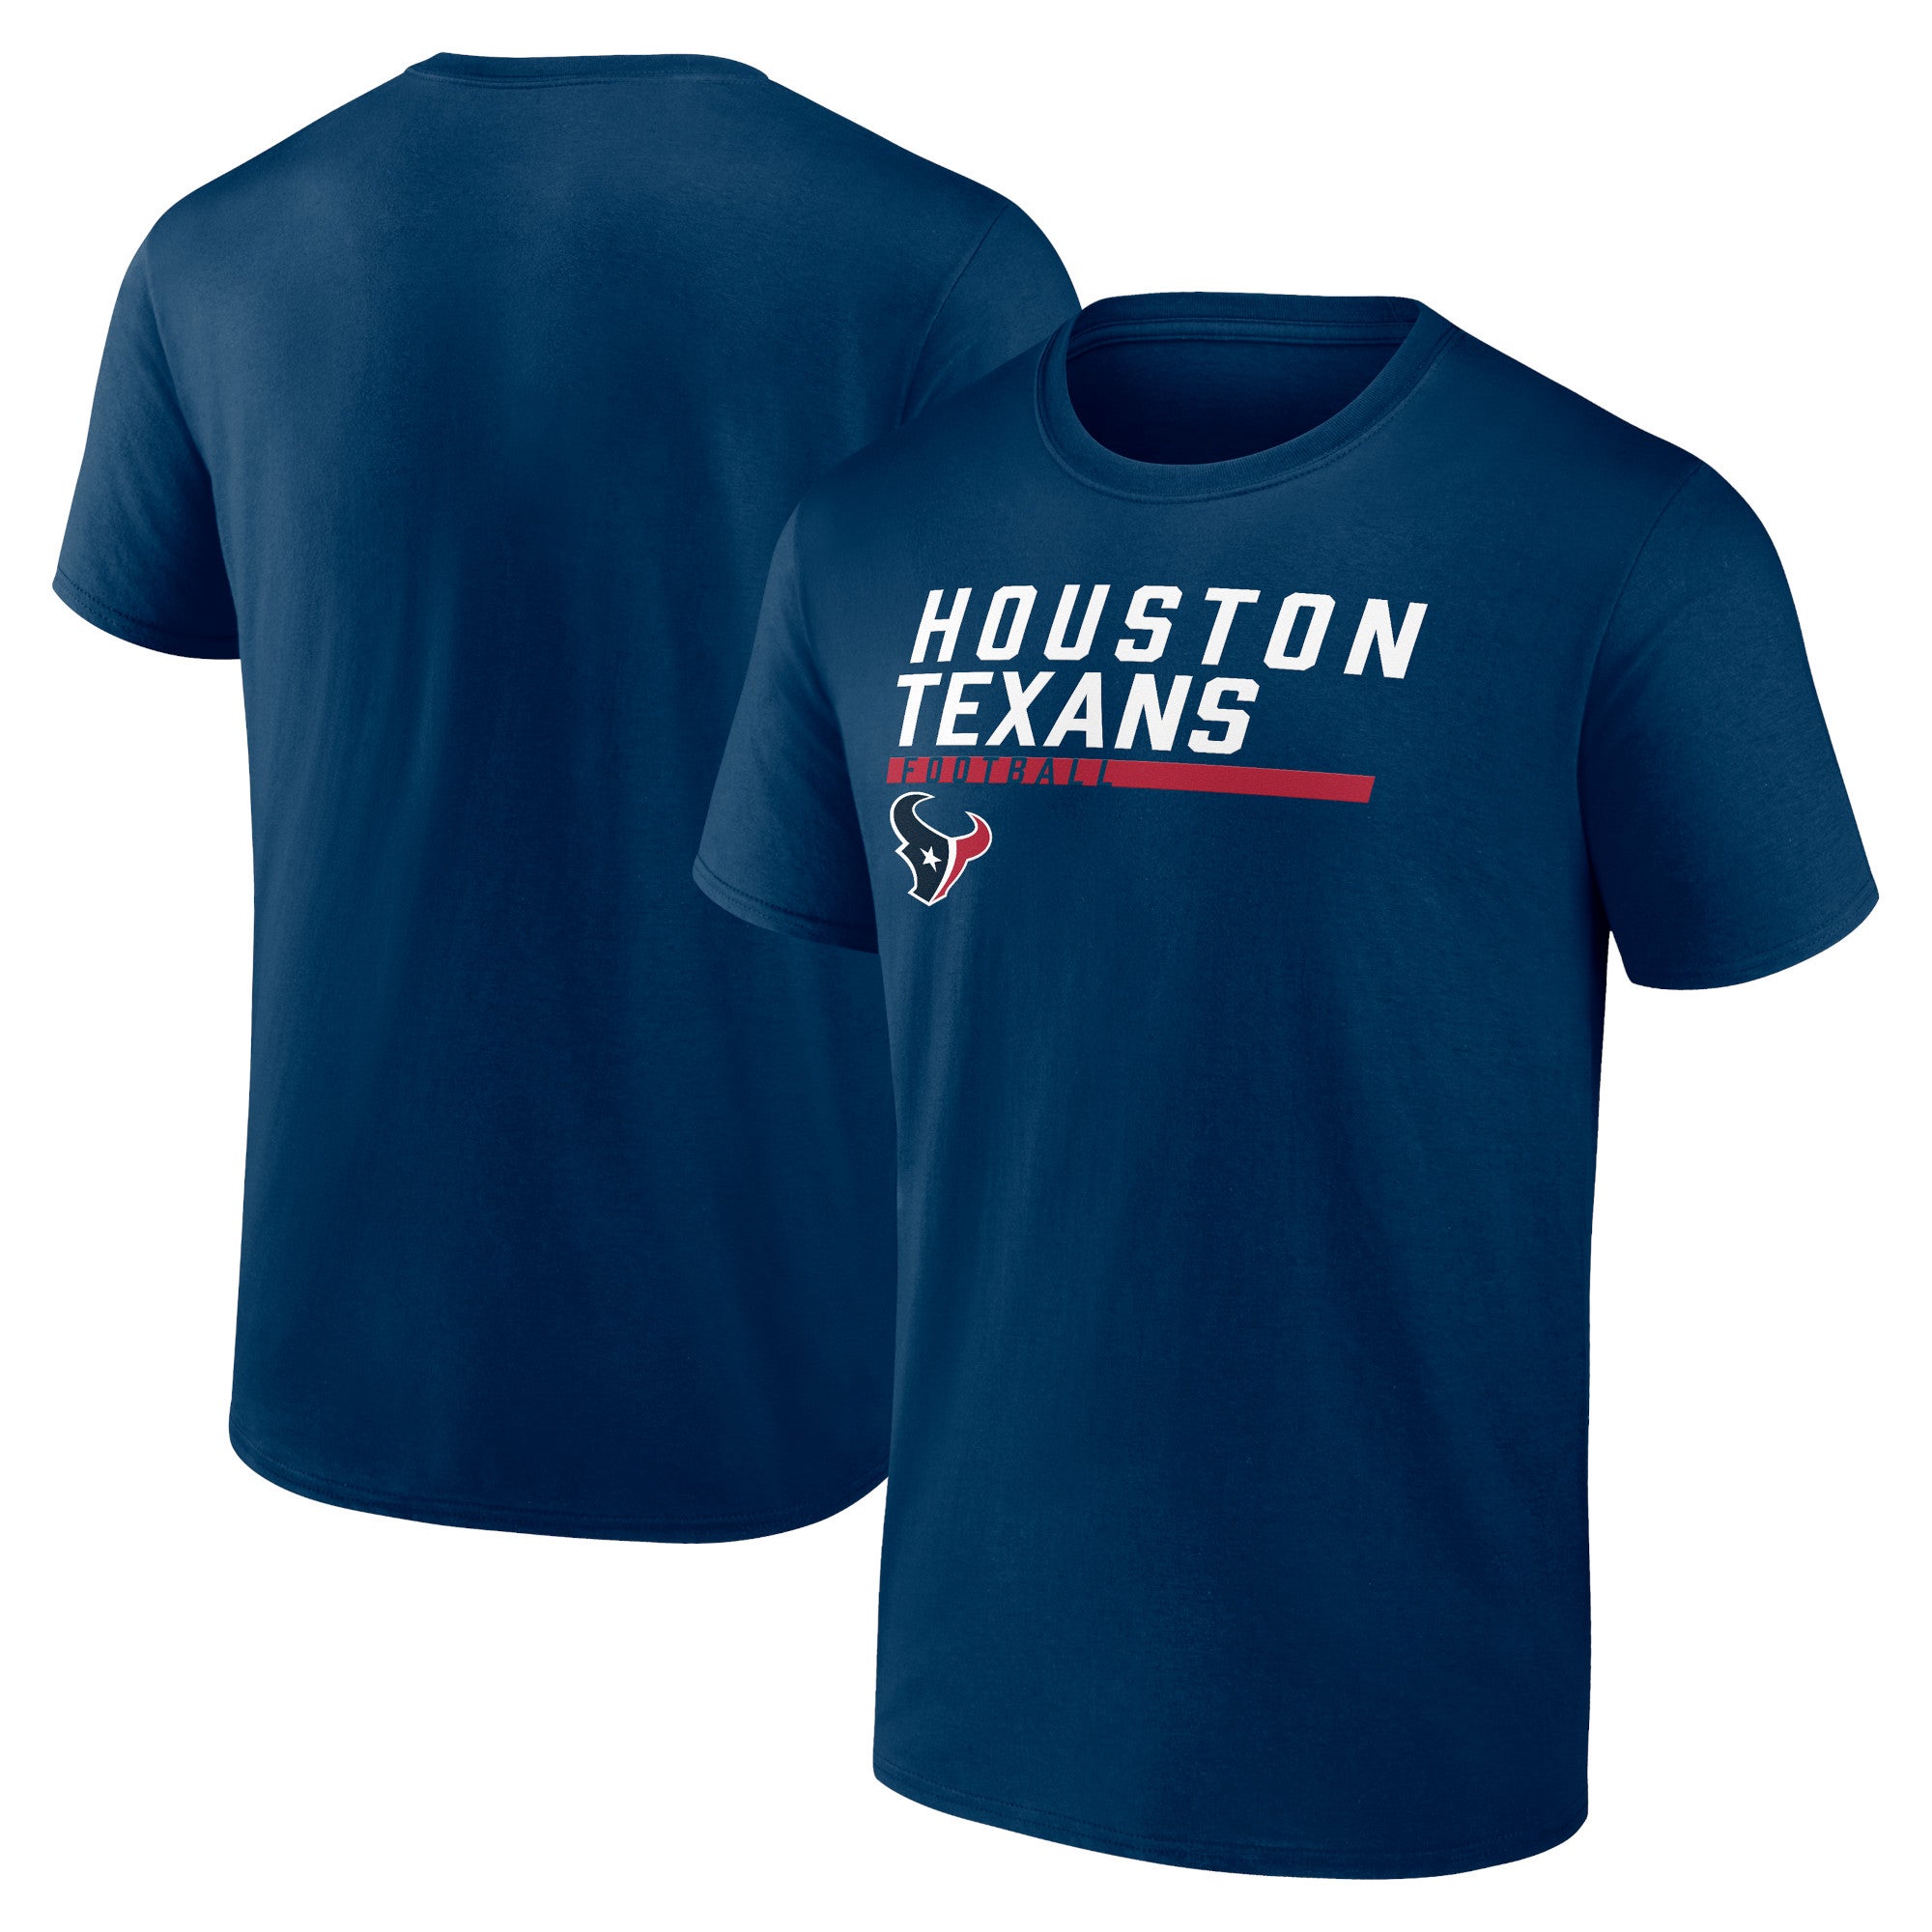 Fanatics Texans Stacked T-Shirt - Men's